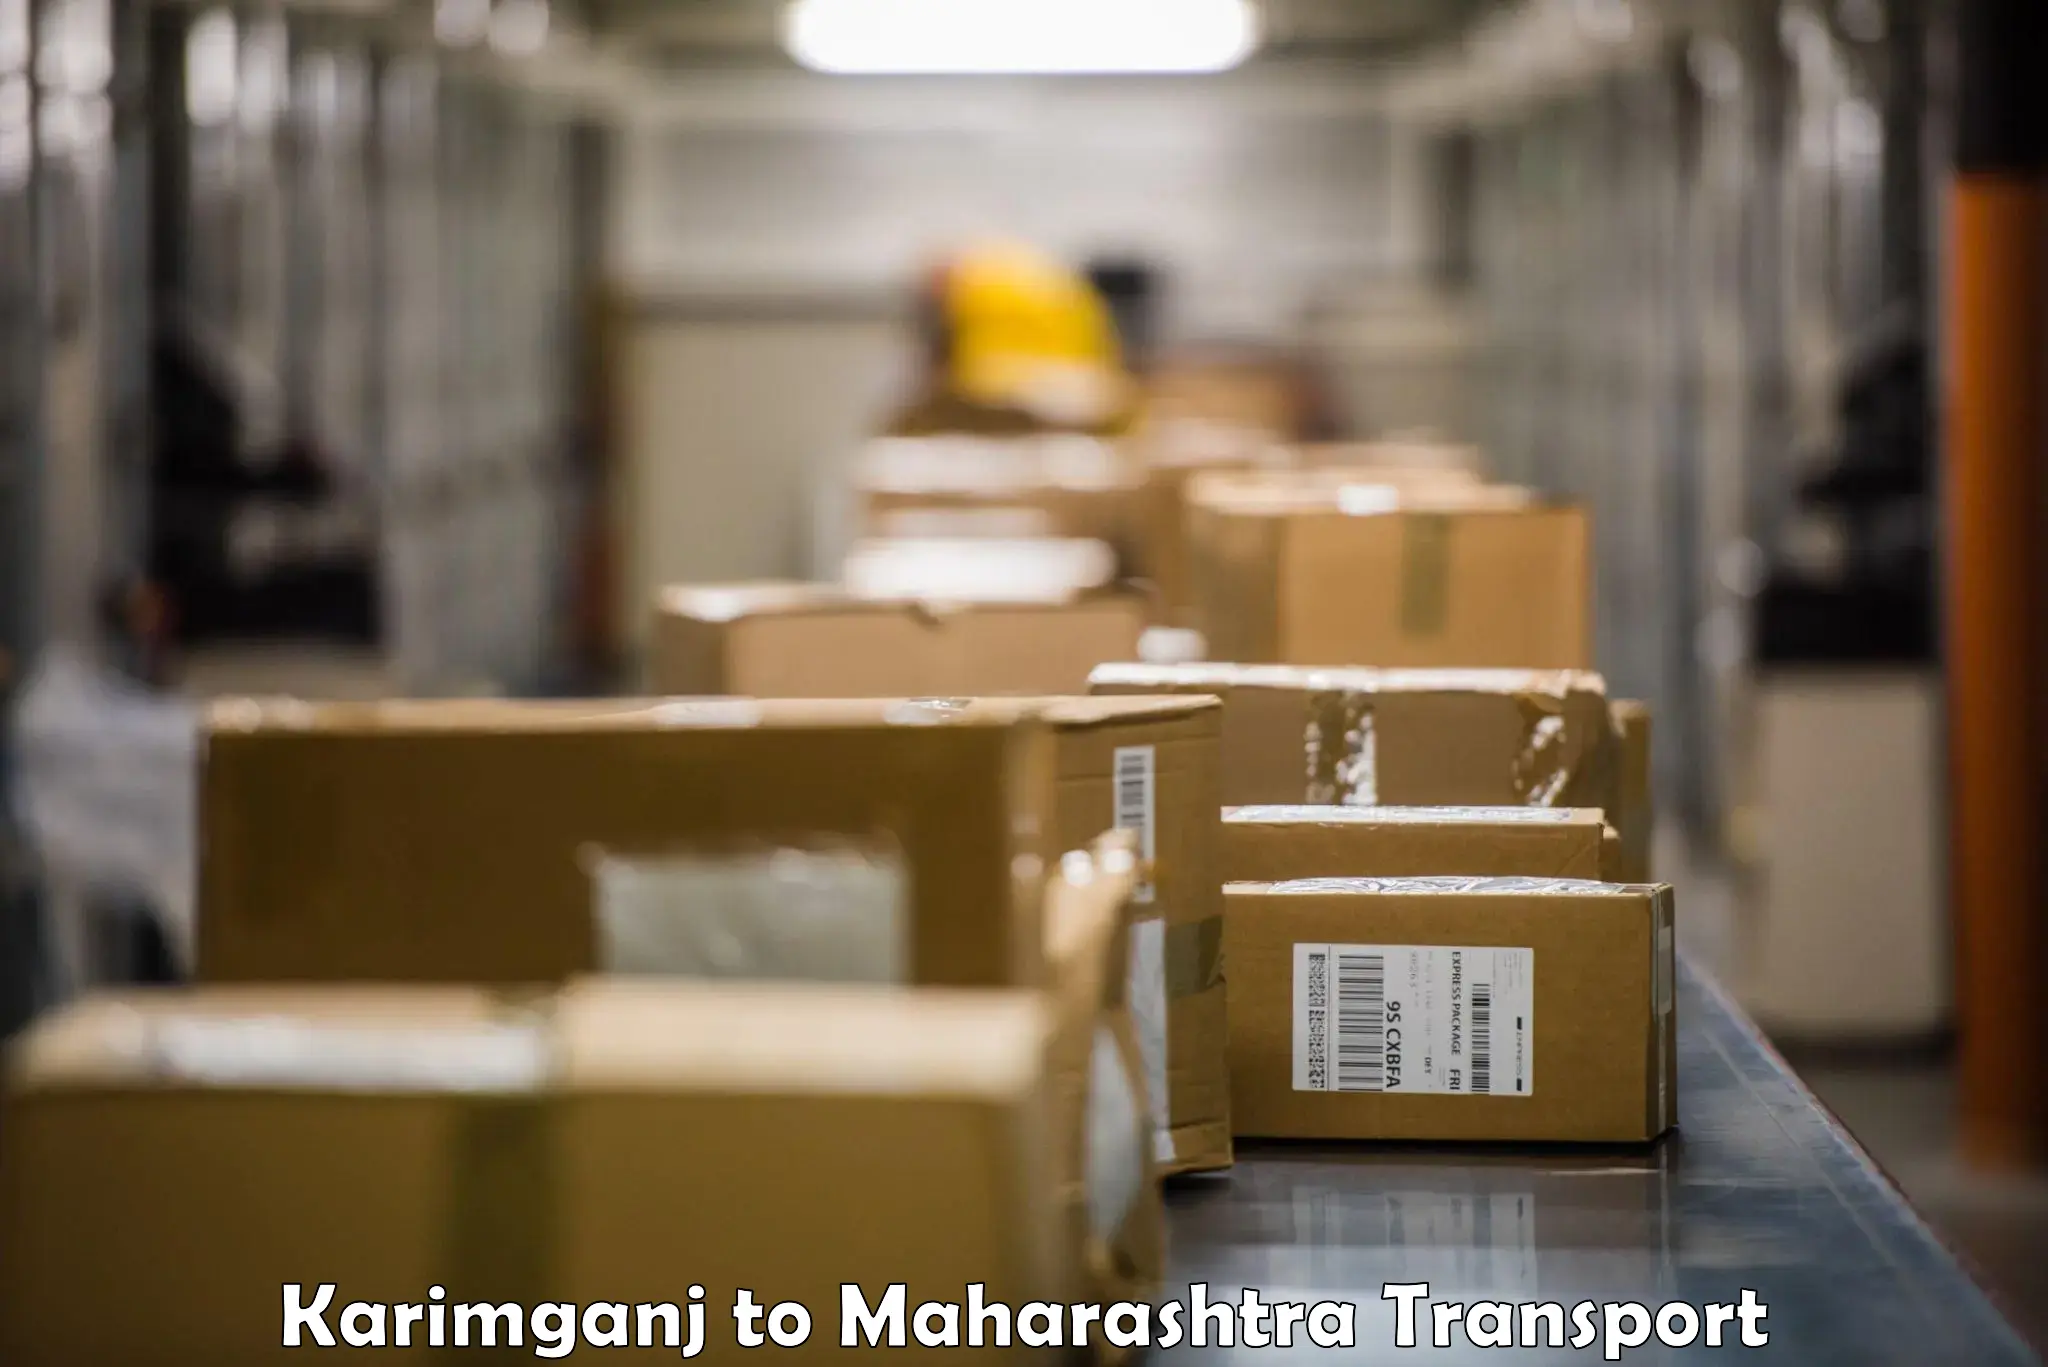 Delivery service Karimganj to Ichalkaranji